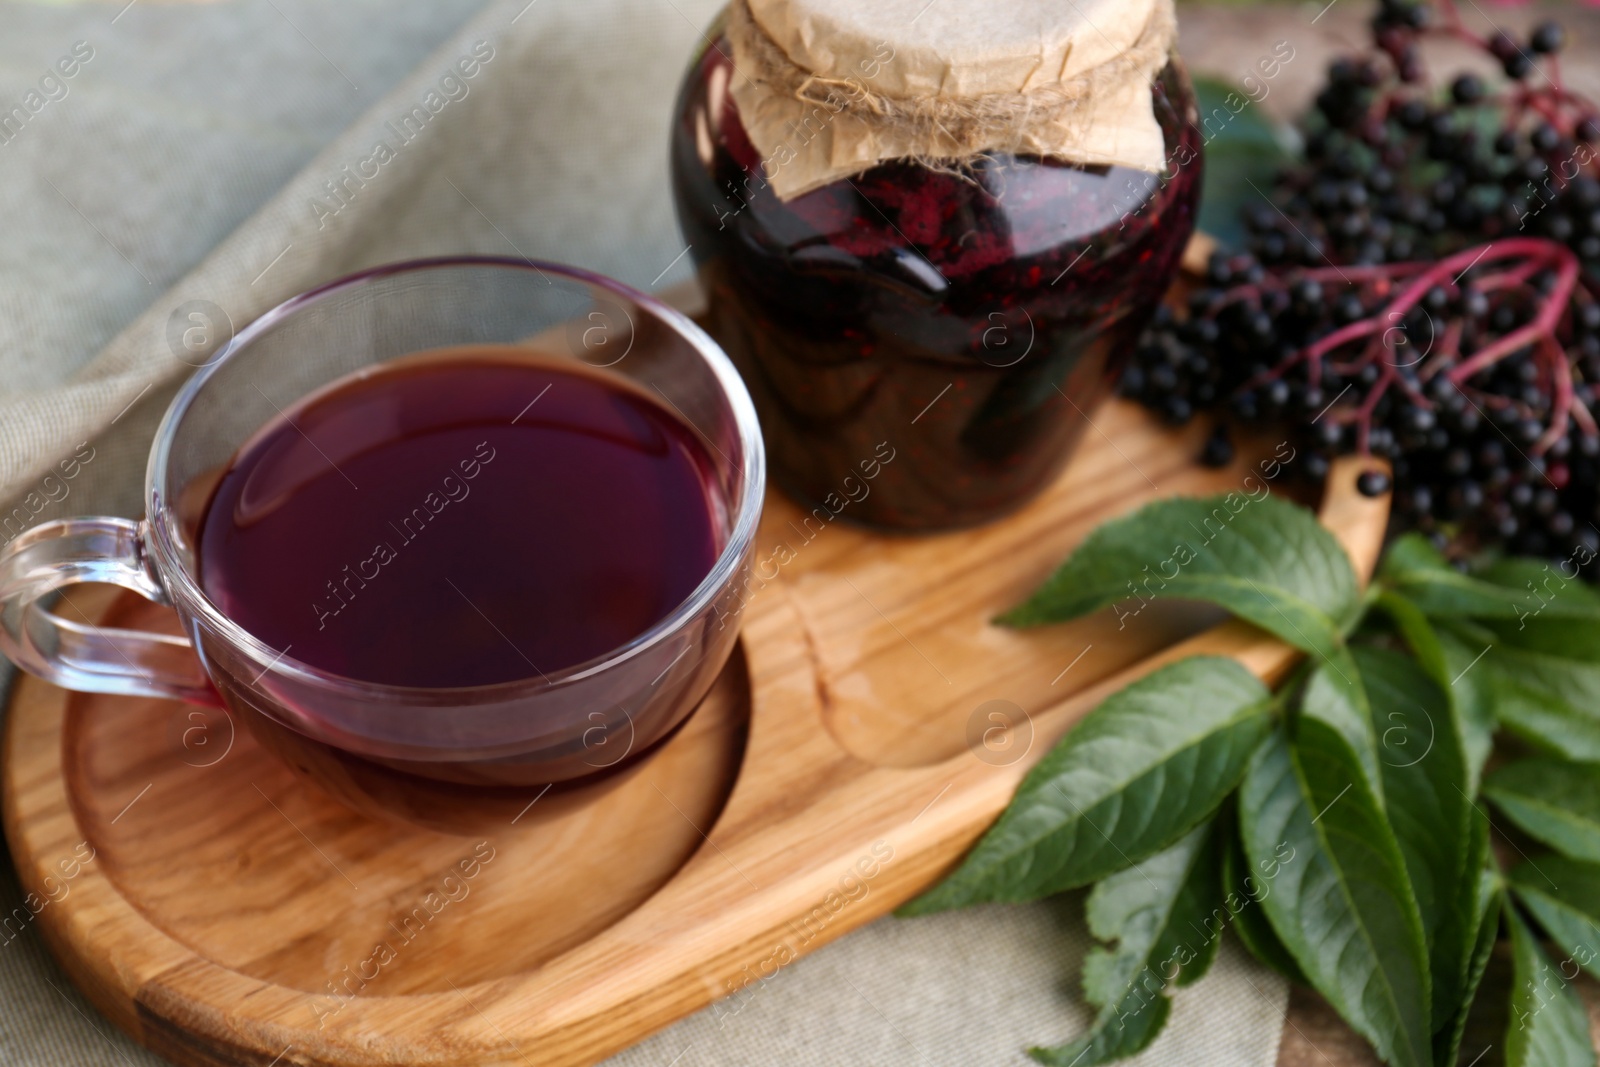 Photo of Elderberry jam, glass cup of tea and Sambucus berries on table